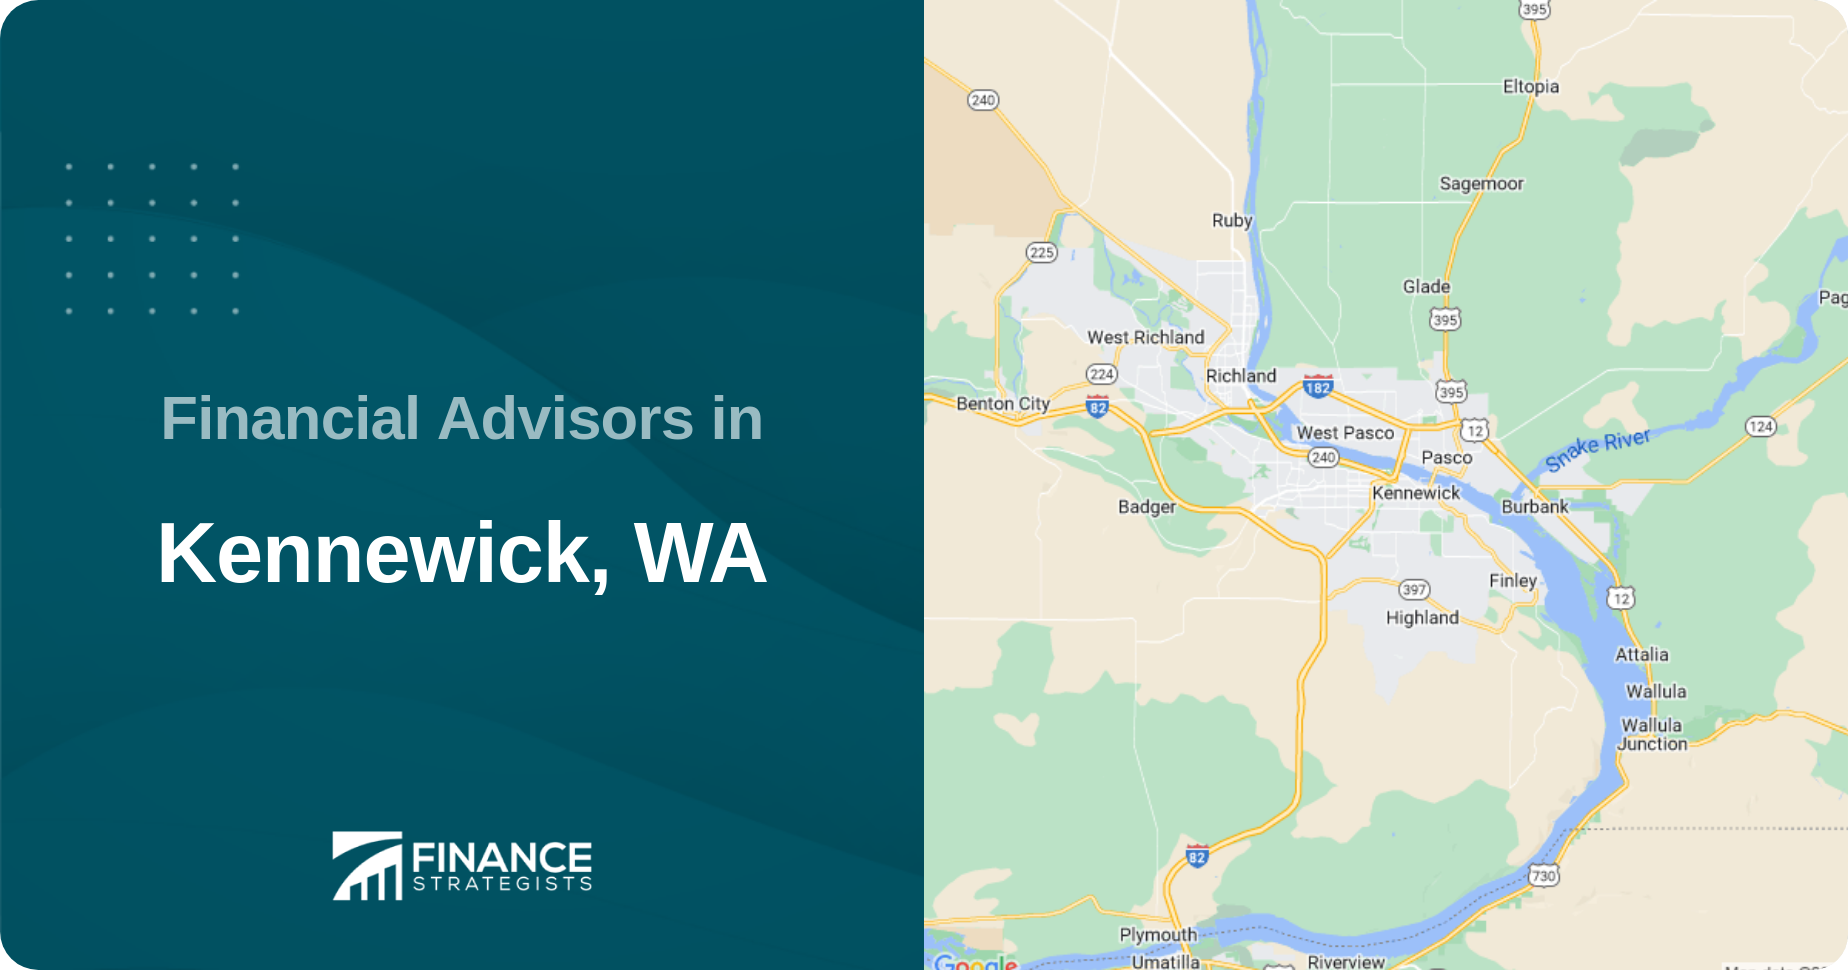 Financial Advisors in Kennewick, WA